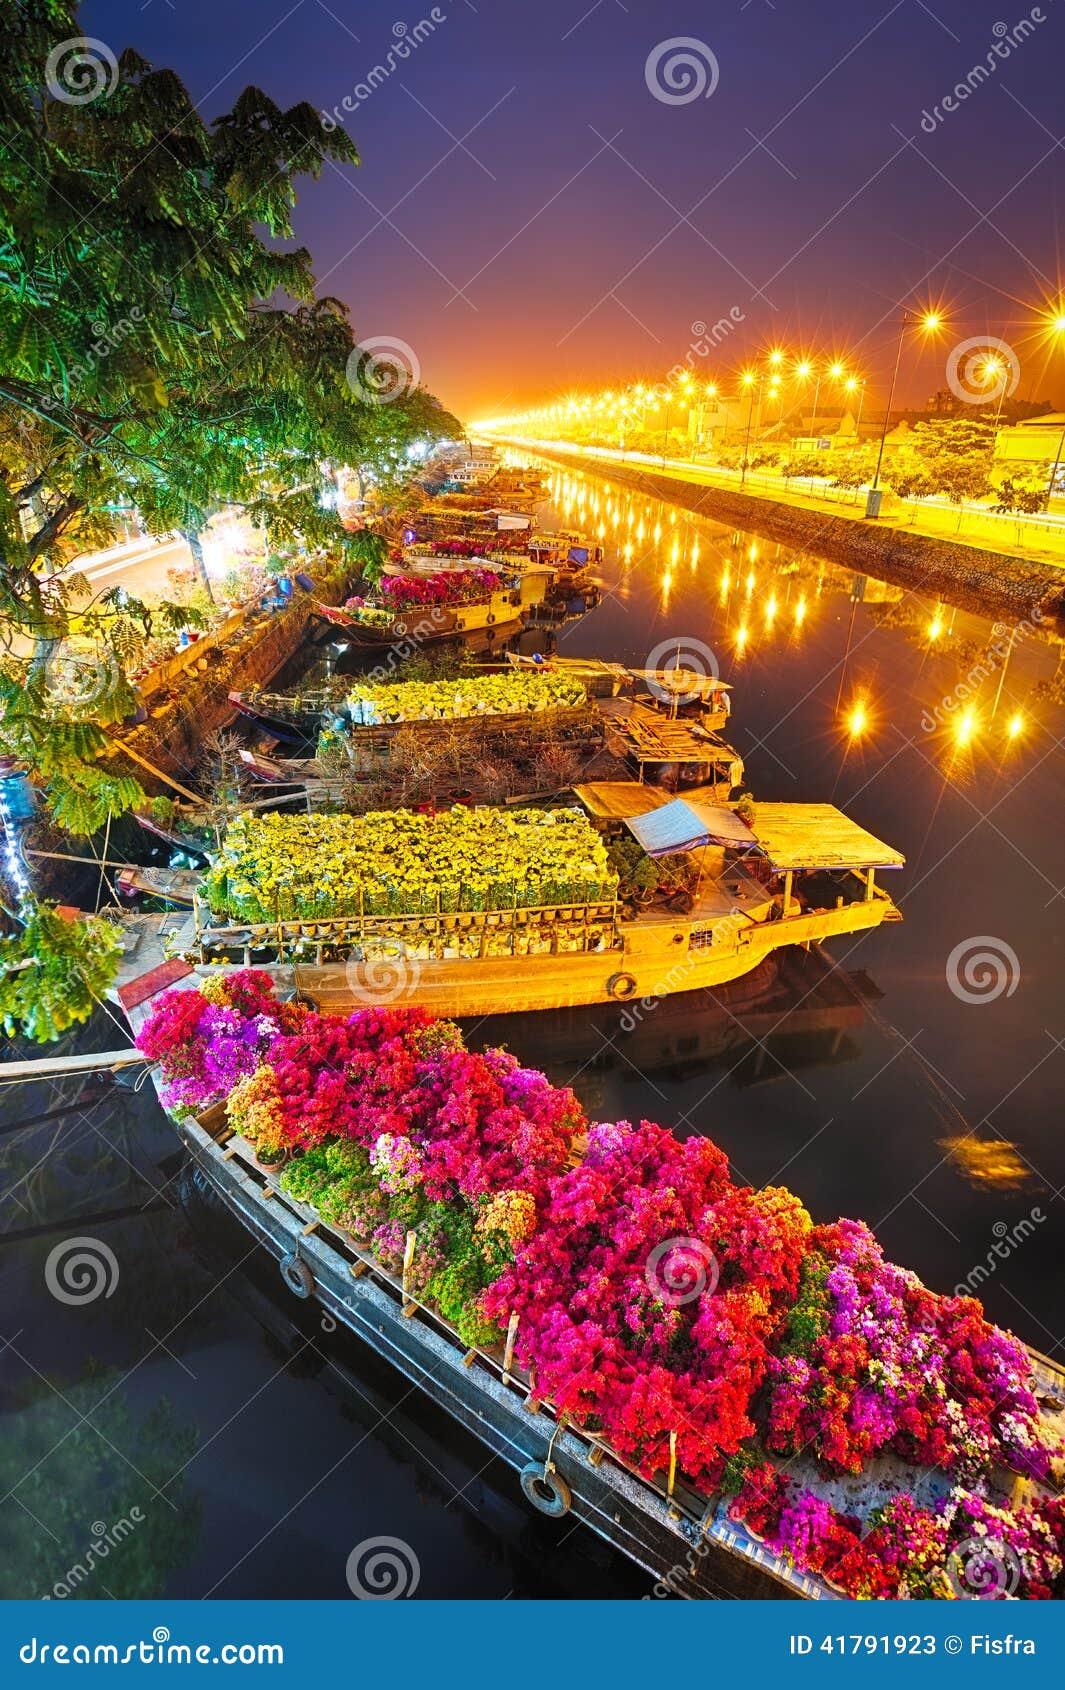 ships at saigon flower market at tet, vietnam